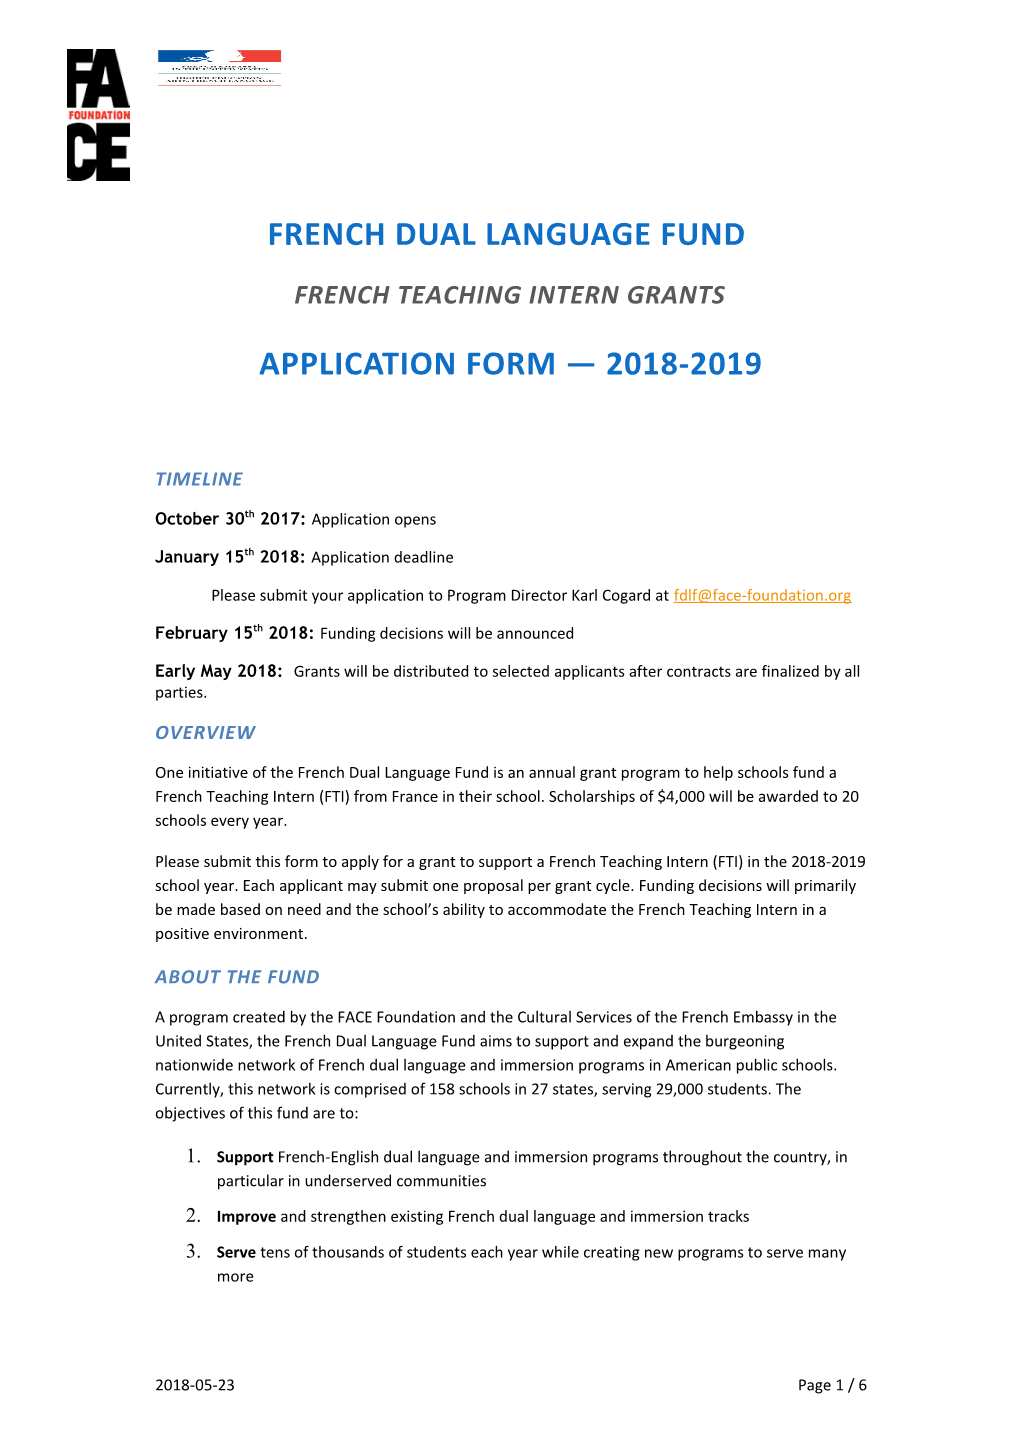 French Dual Language Fund